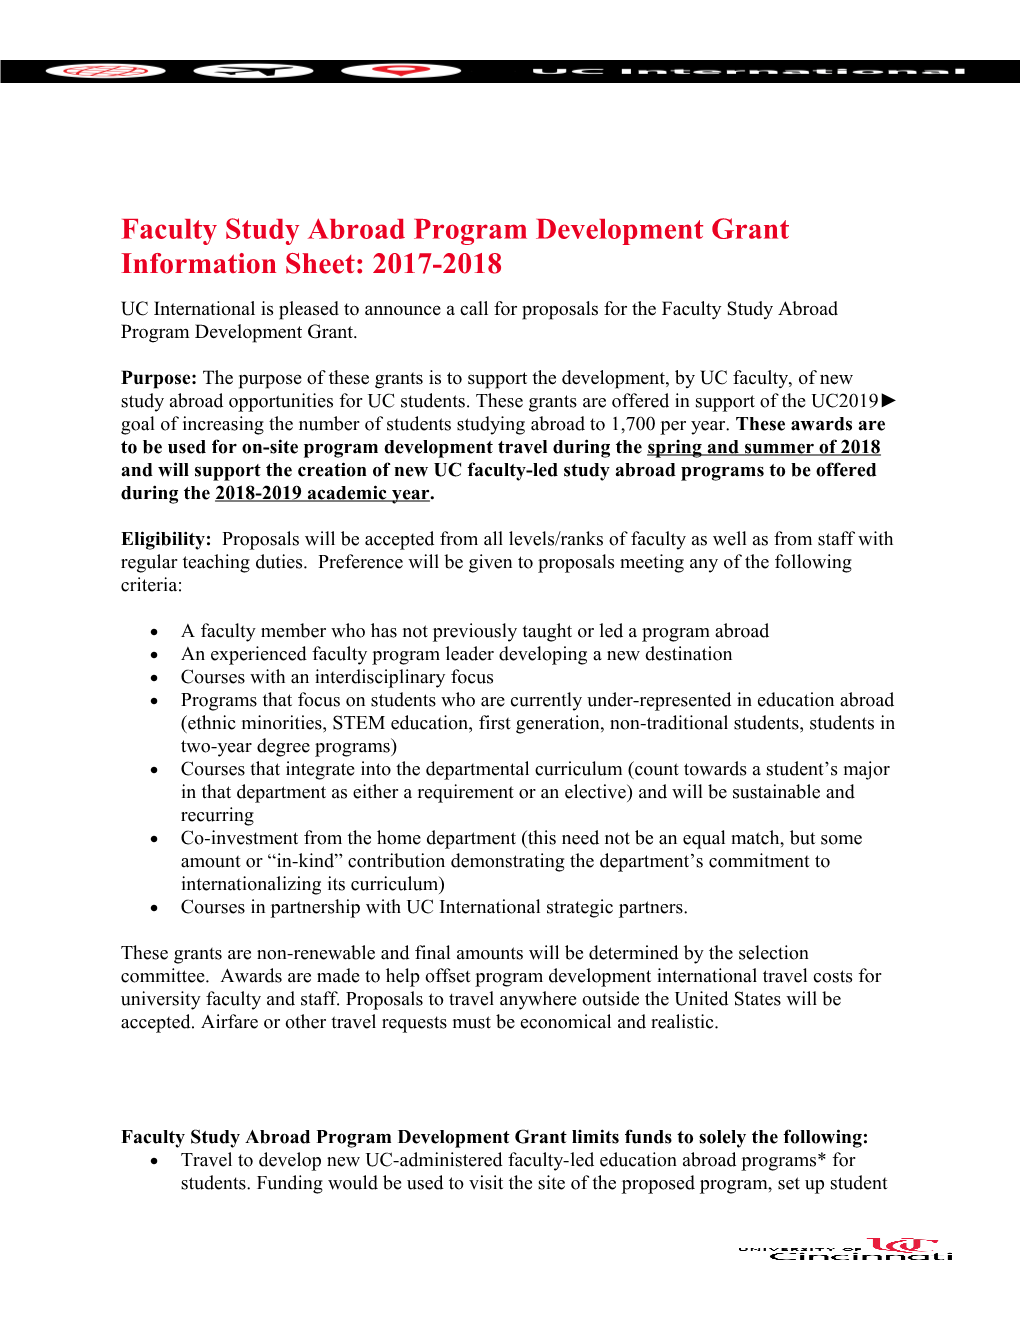 Faculty Study Abroad Program Development Grant Information Sheet: 2017-2018